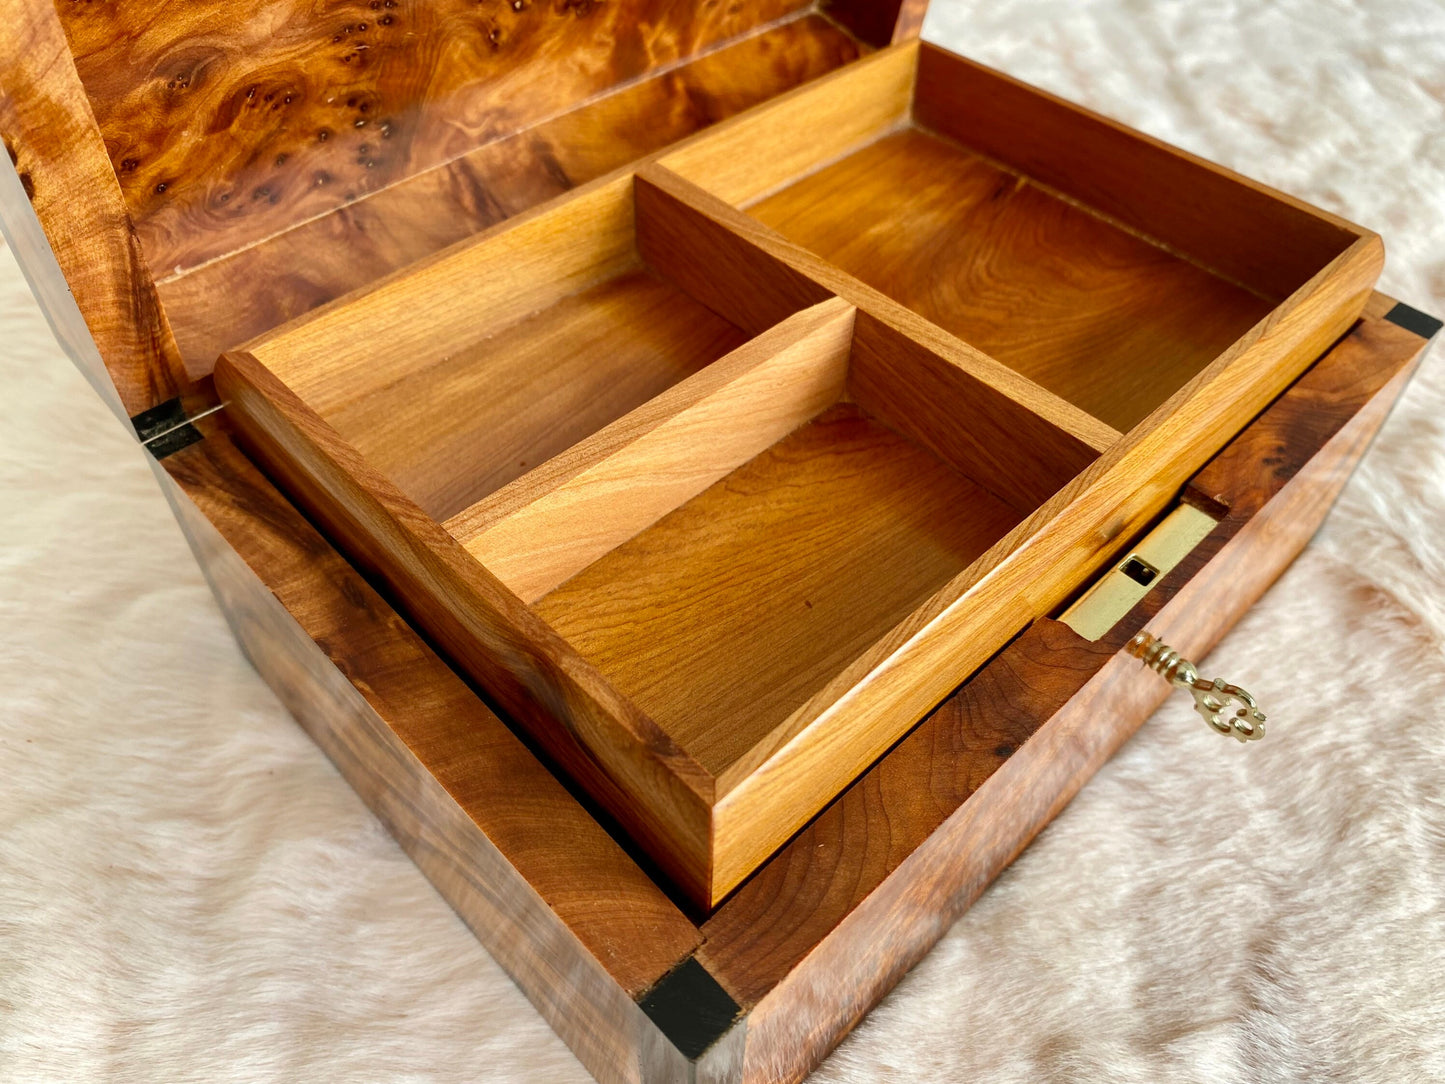 7"x5" Moroccan jewellery Box,large lockable thuya wooden burl Jewelry Box organizer with key,Christmas Couples gift,wedding wood memory box